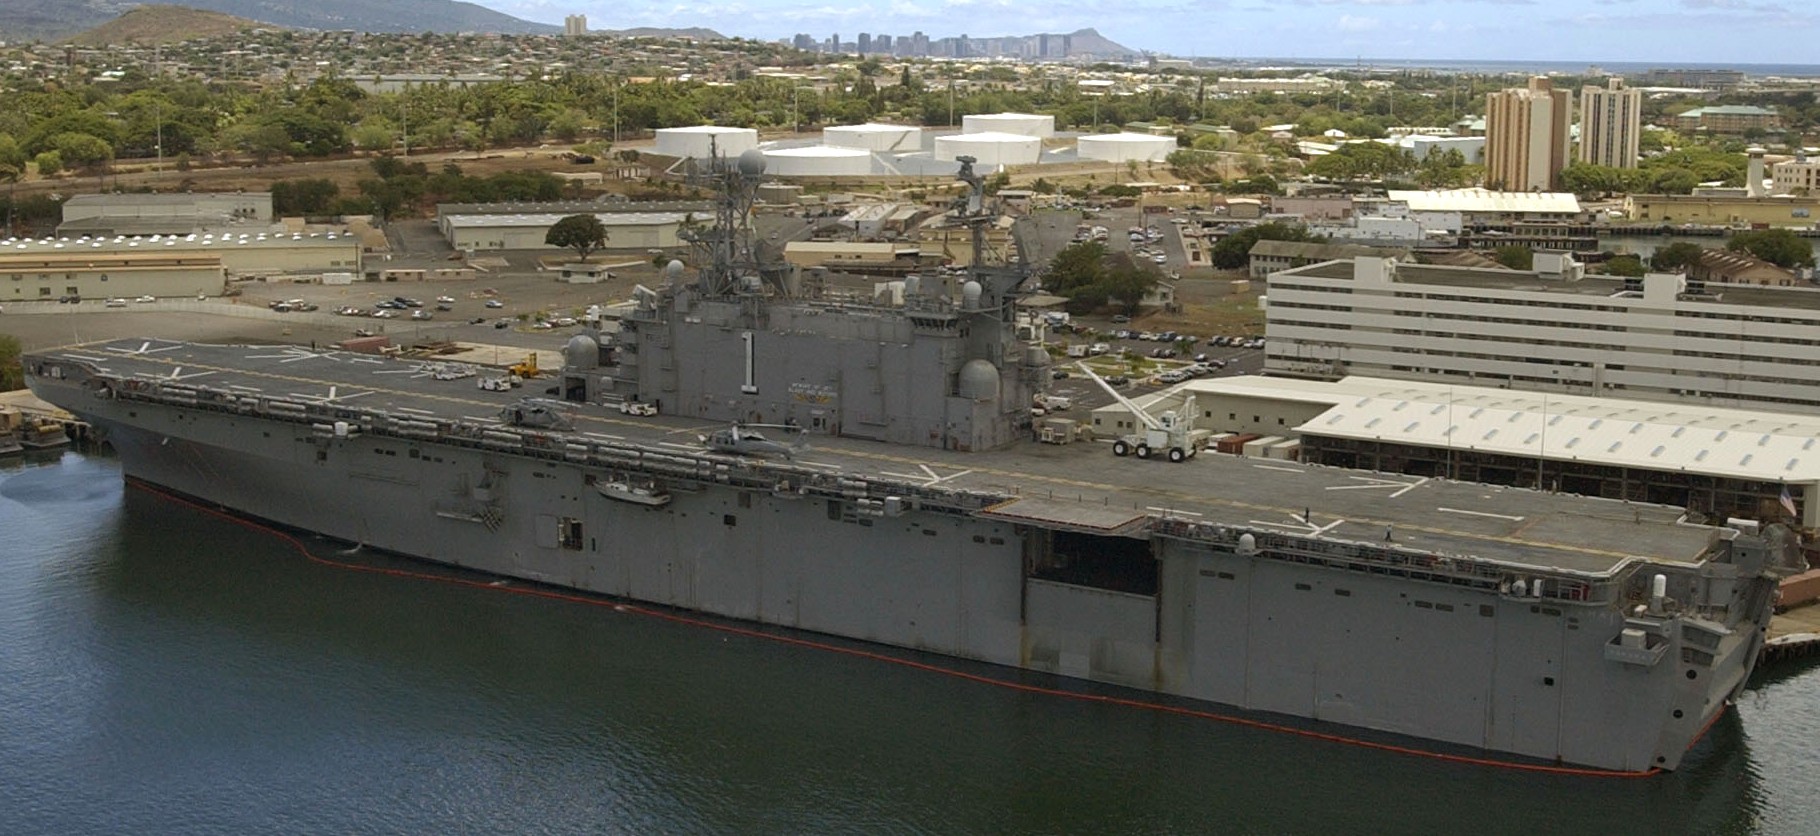 lha-1 uss tarawa amphibious assault ship us navy exercise rimpac 04 pearl harbor hawaii 25